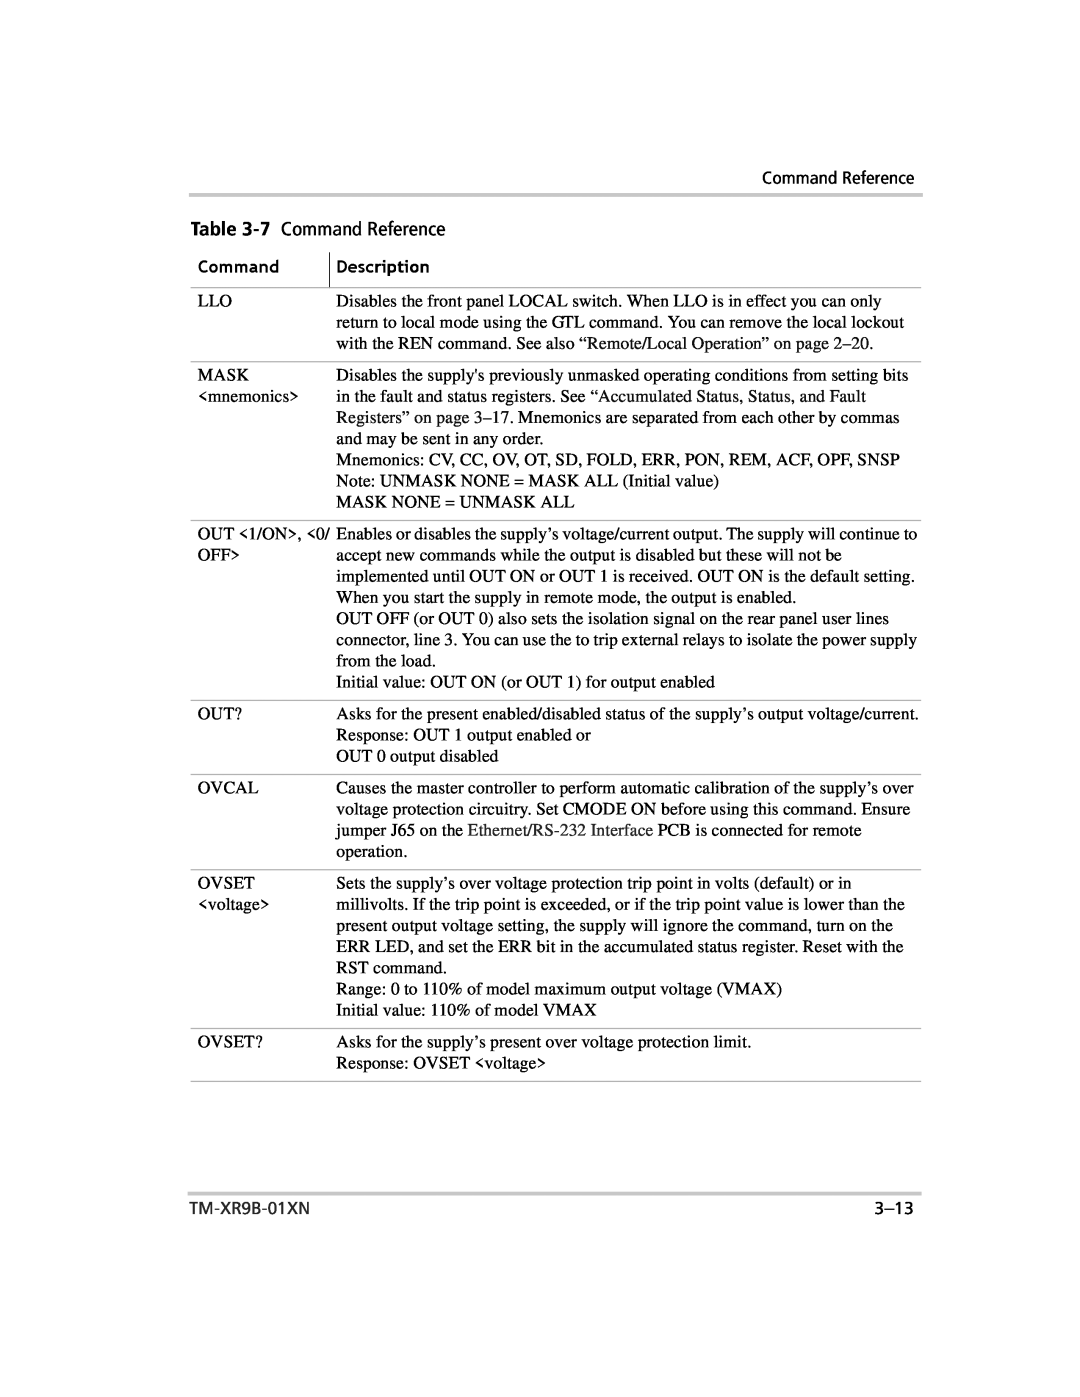 Xantrex Technology ENET-XFR3 manual Description, 7 Command Reference, TM-XR9B-01XN, 3-13 